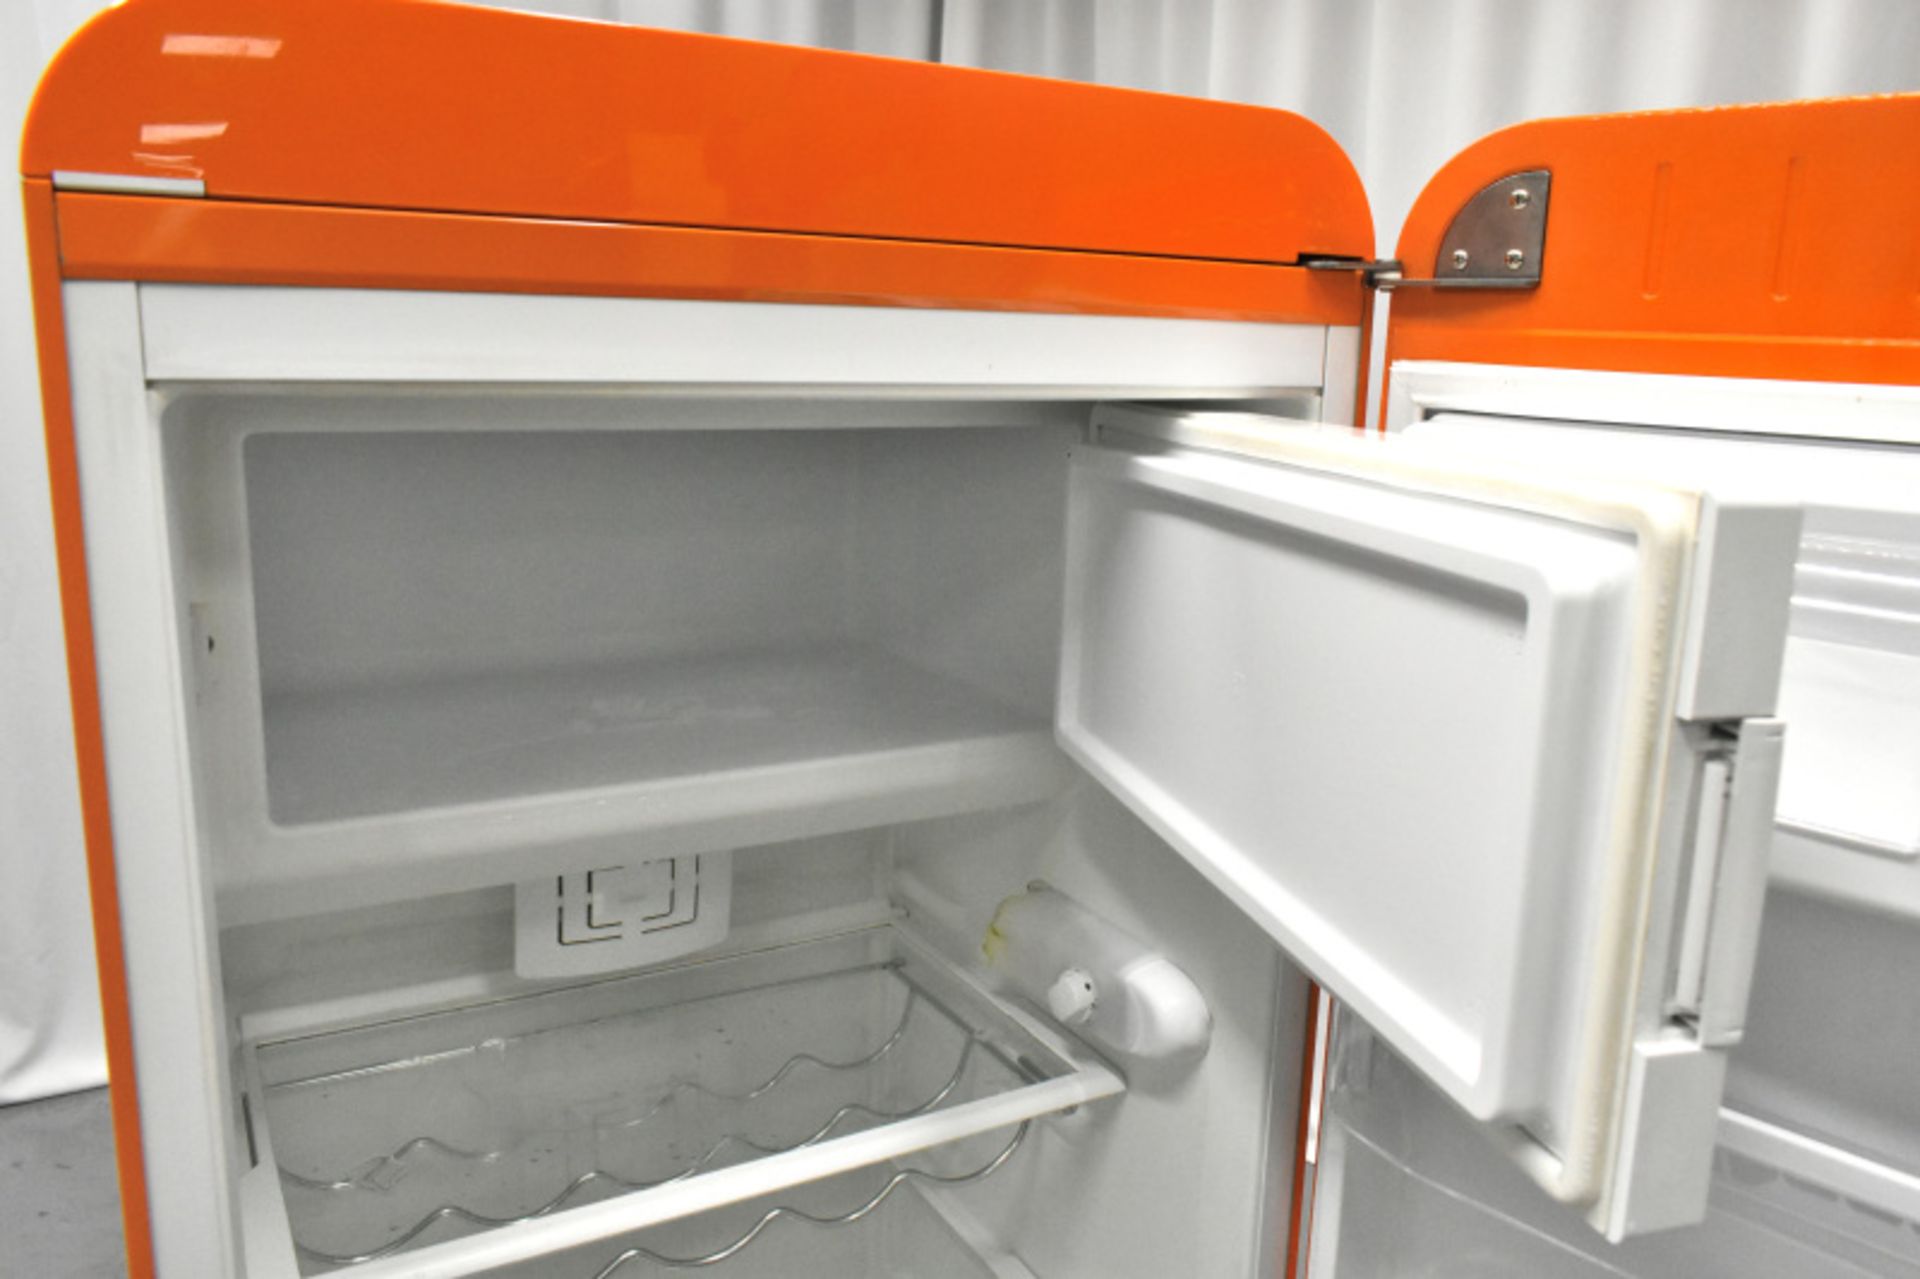 Smeg Retro Orange Fridge - Model FAB28QO1 with small freezer compartment - 600 x 1510 x 54 - Image 8 of 9